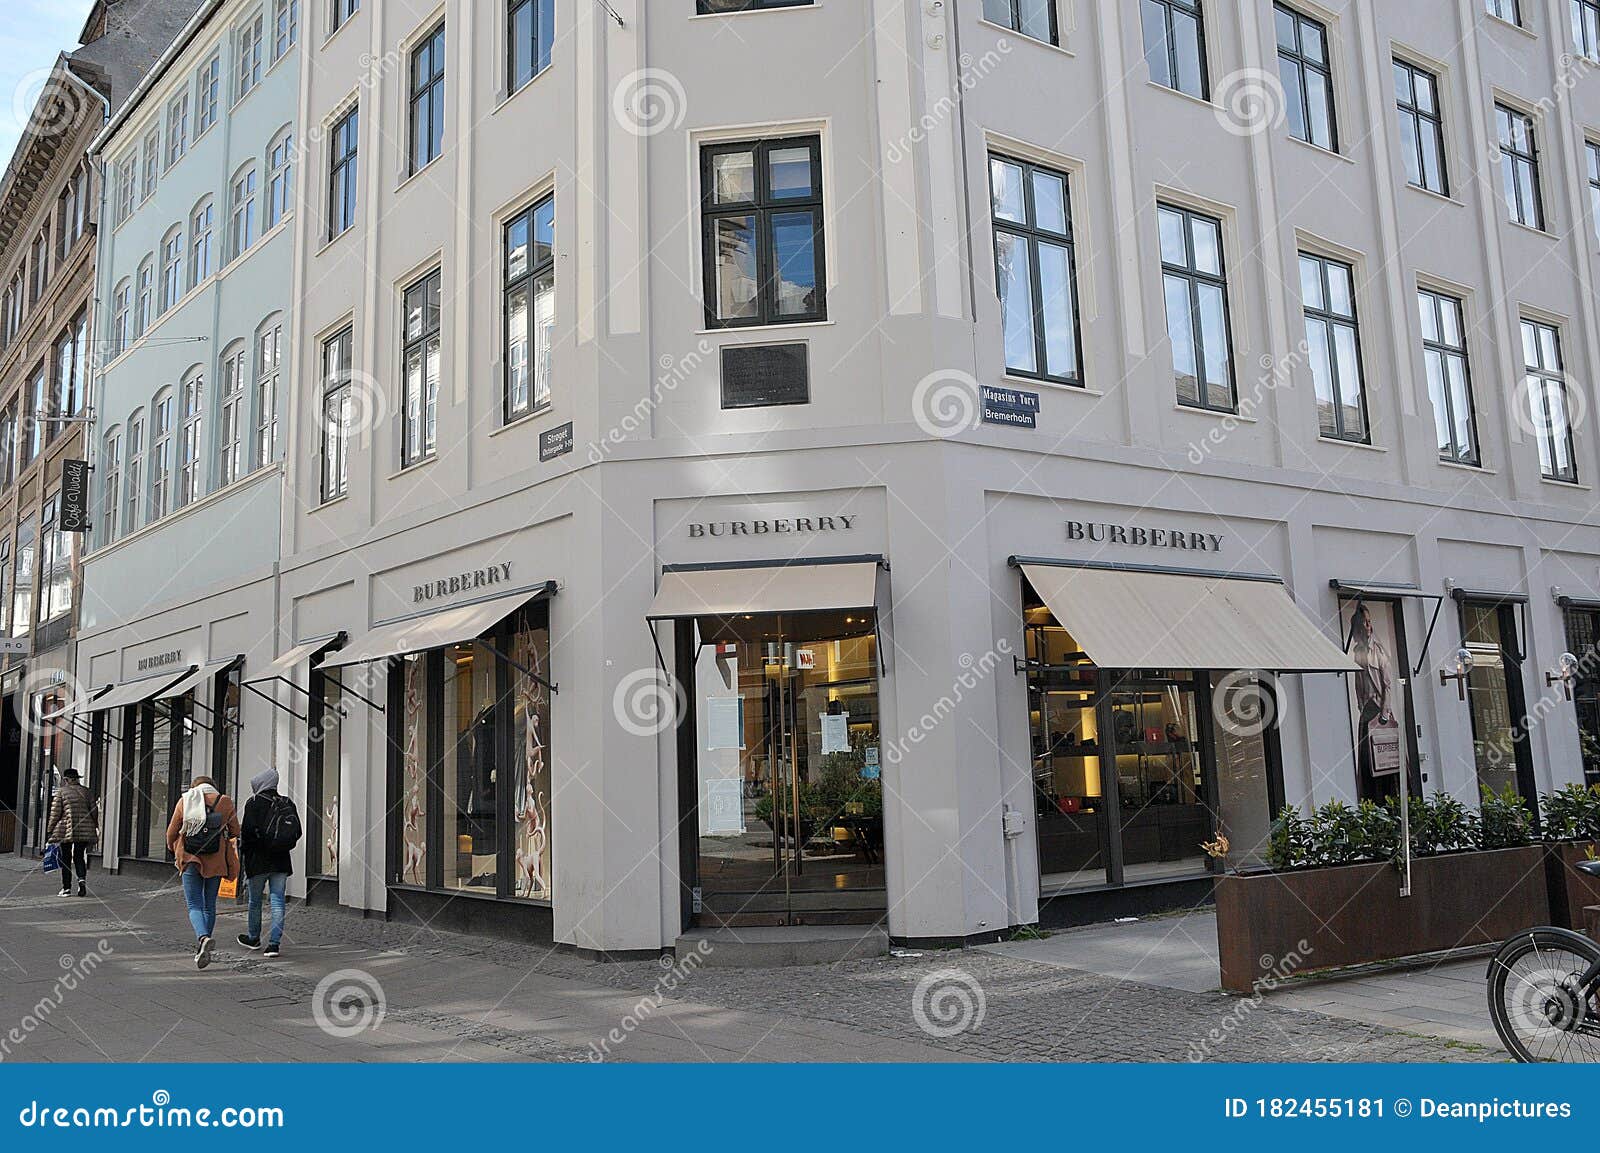 Burberry Shop in Copenhagen Denmark Covid-19 Editorial Photo - Image copenhagen, europa: 182455181